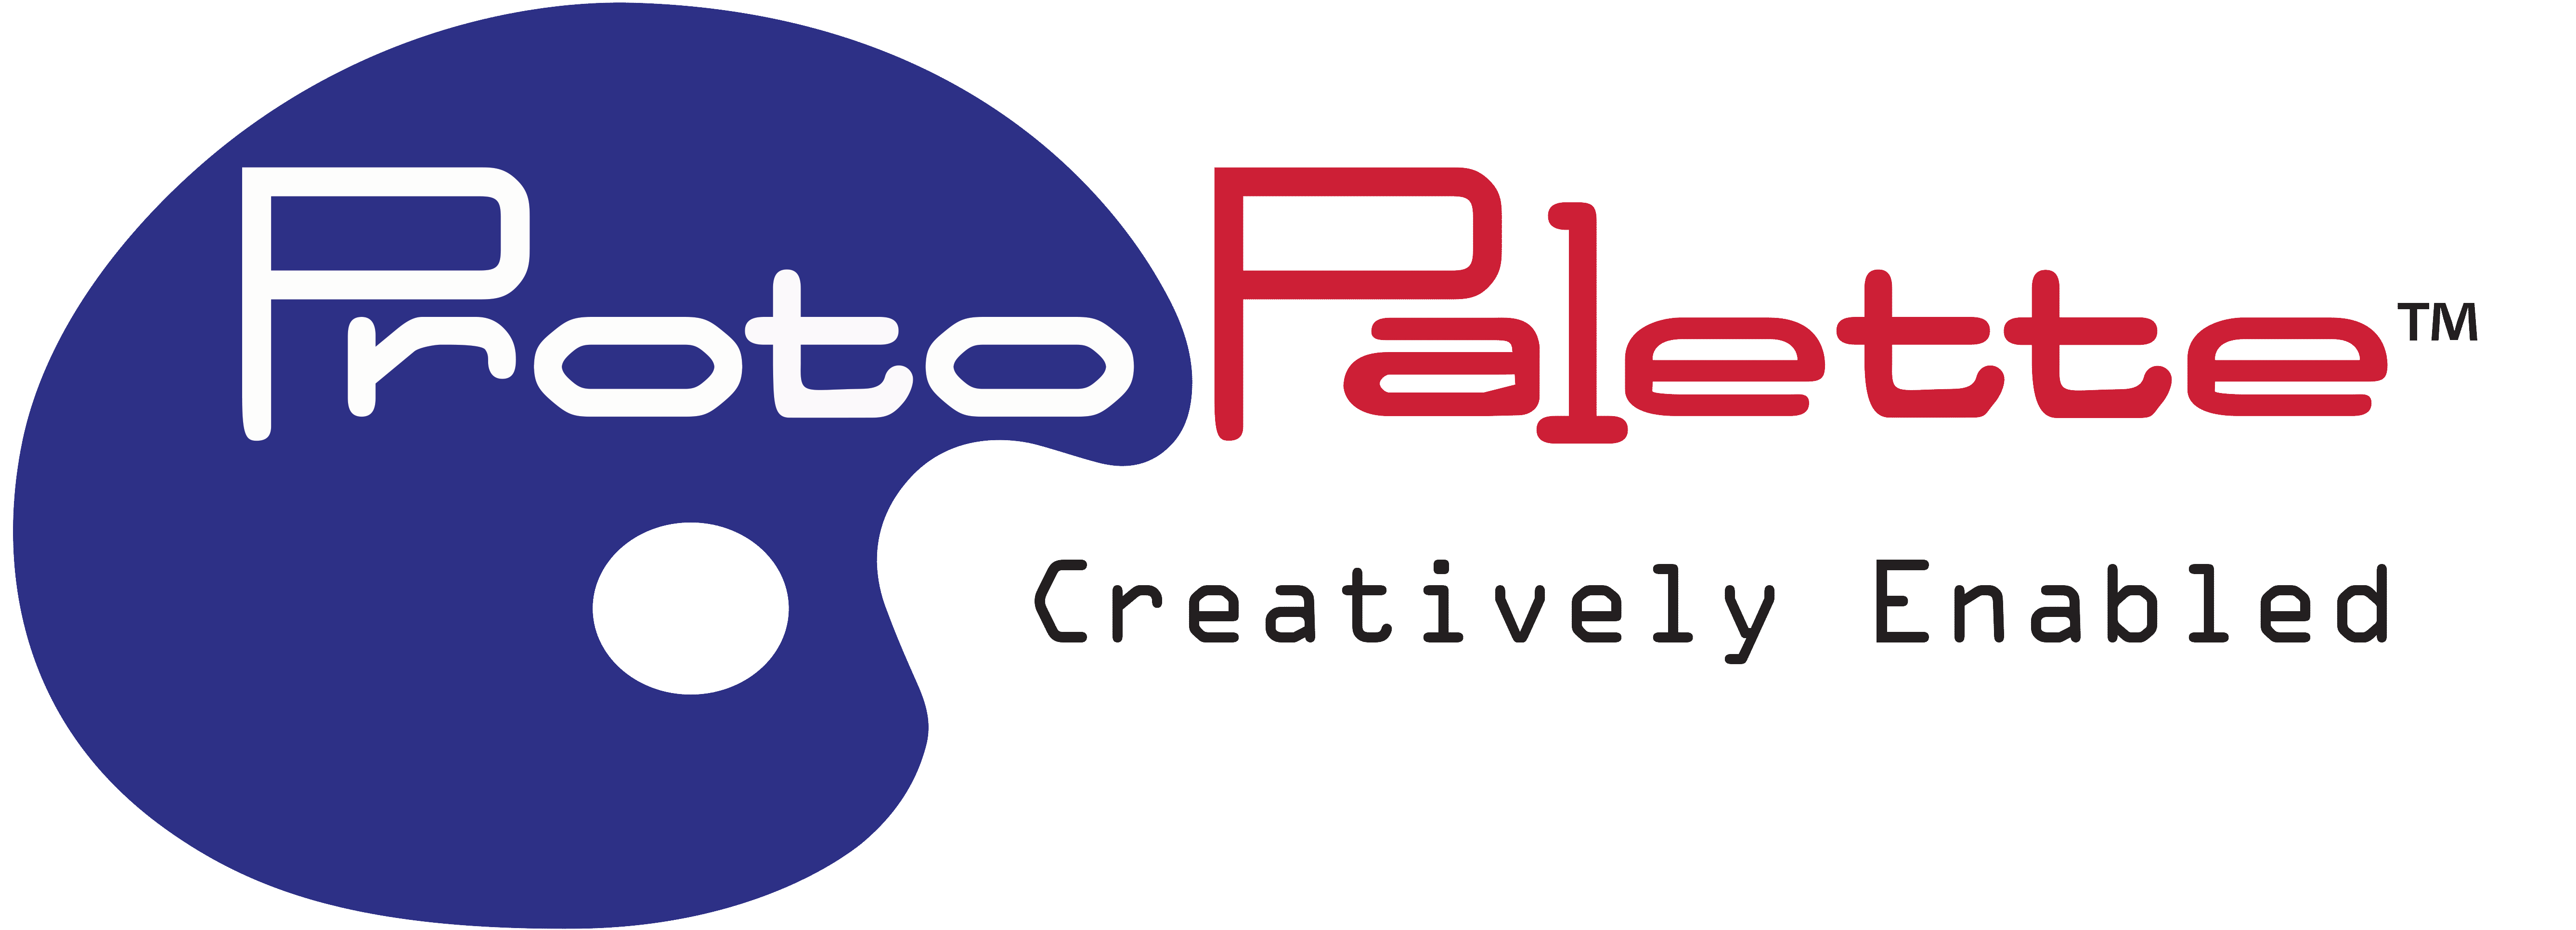 ProtoPalette Logo